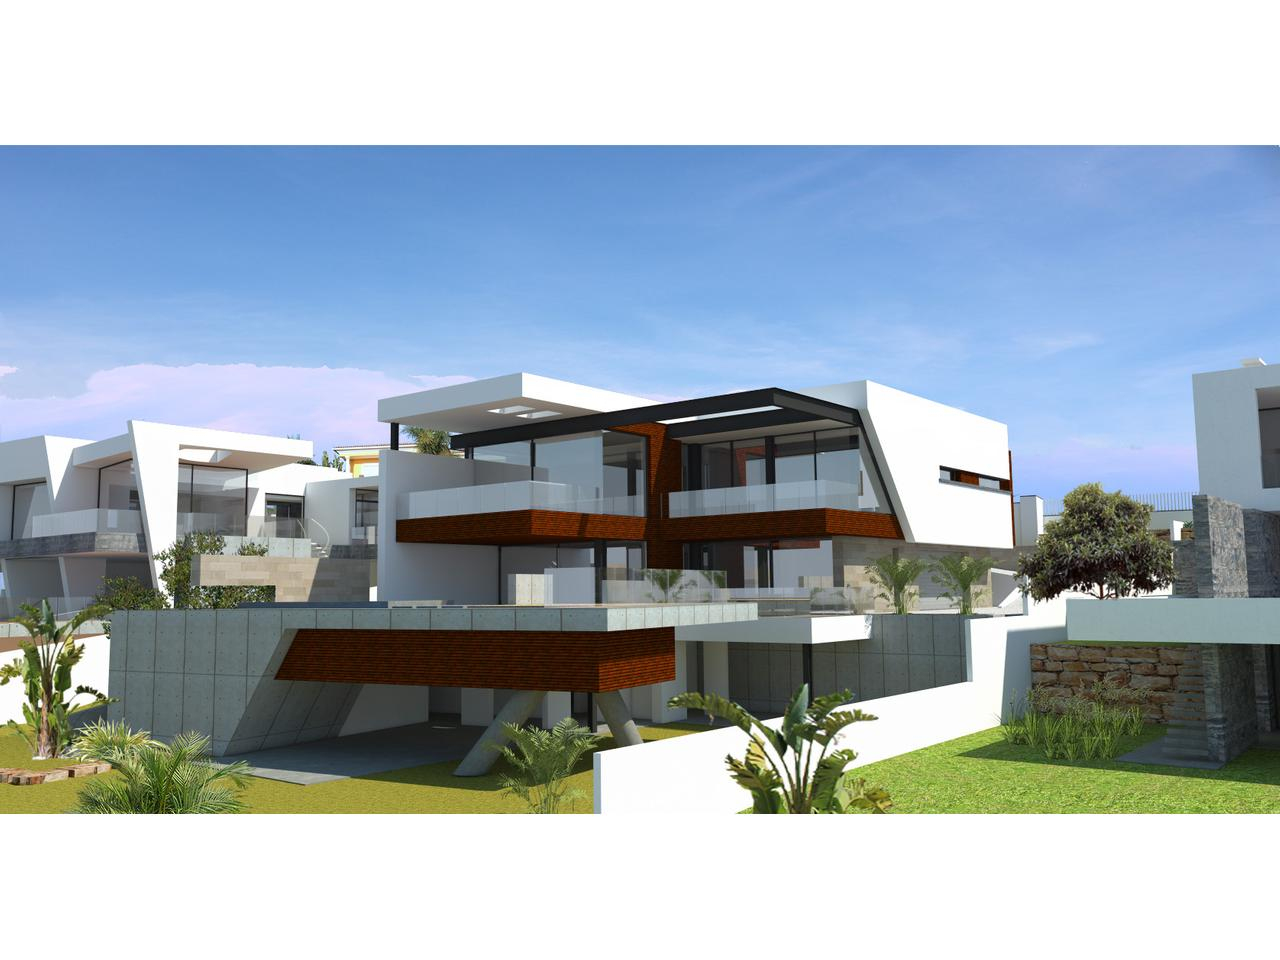 Vente Houses And Apartments Portugal: serapportantà Location Maison Avec Piscine Portugal